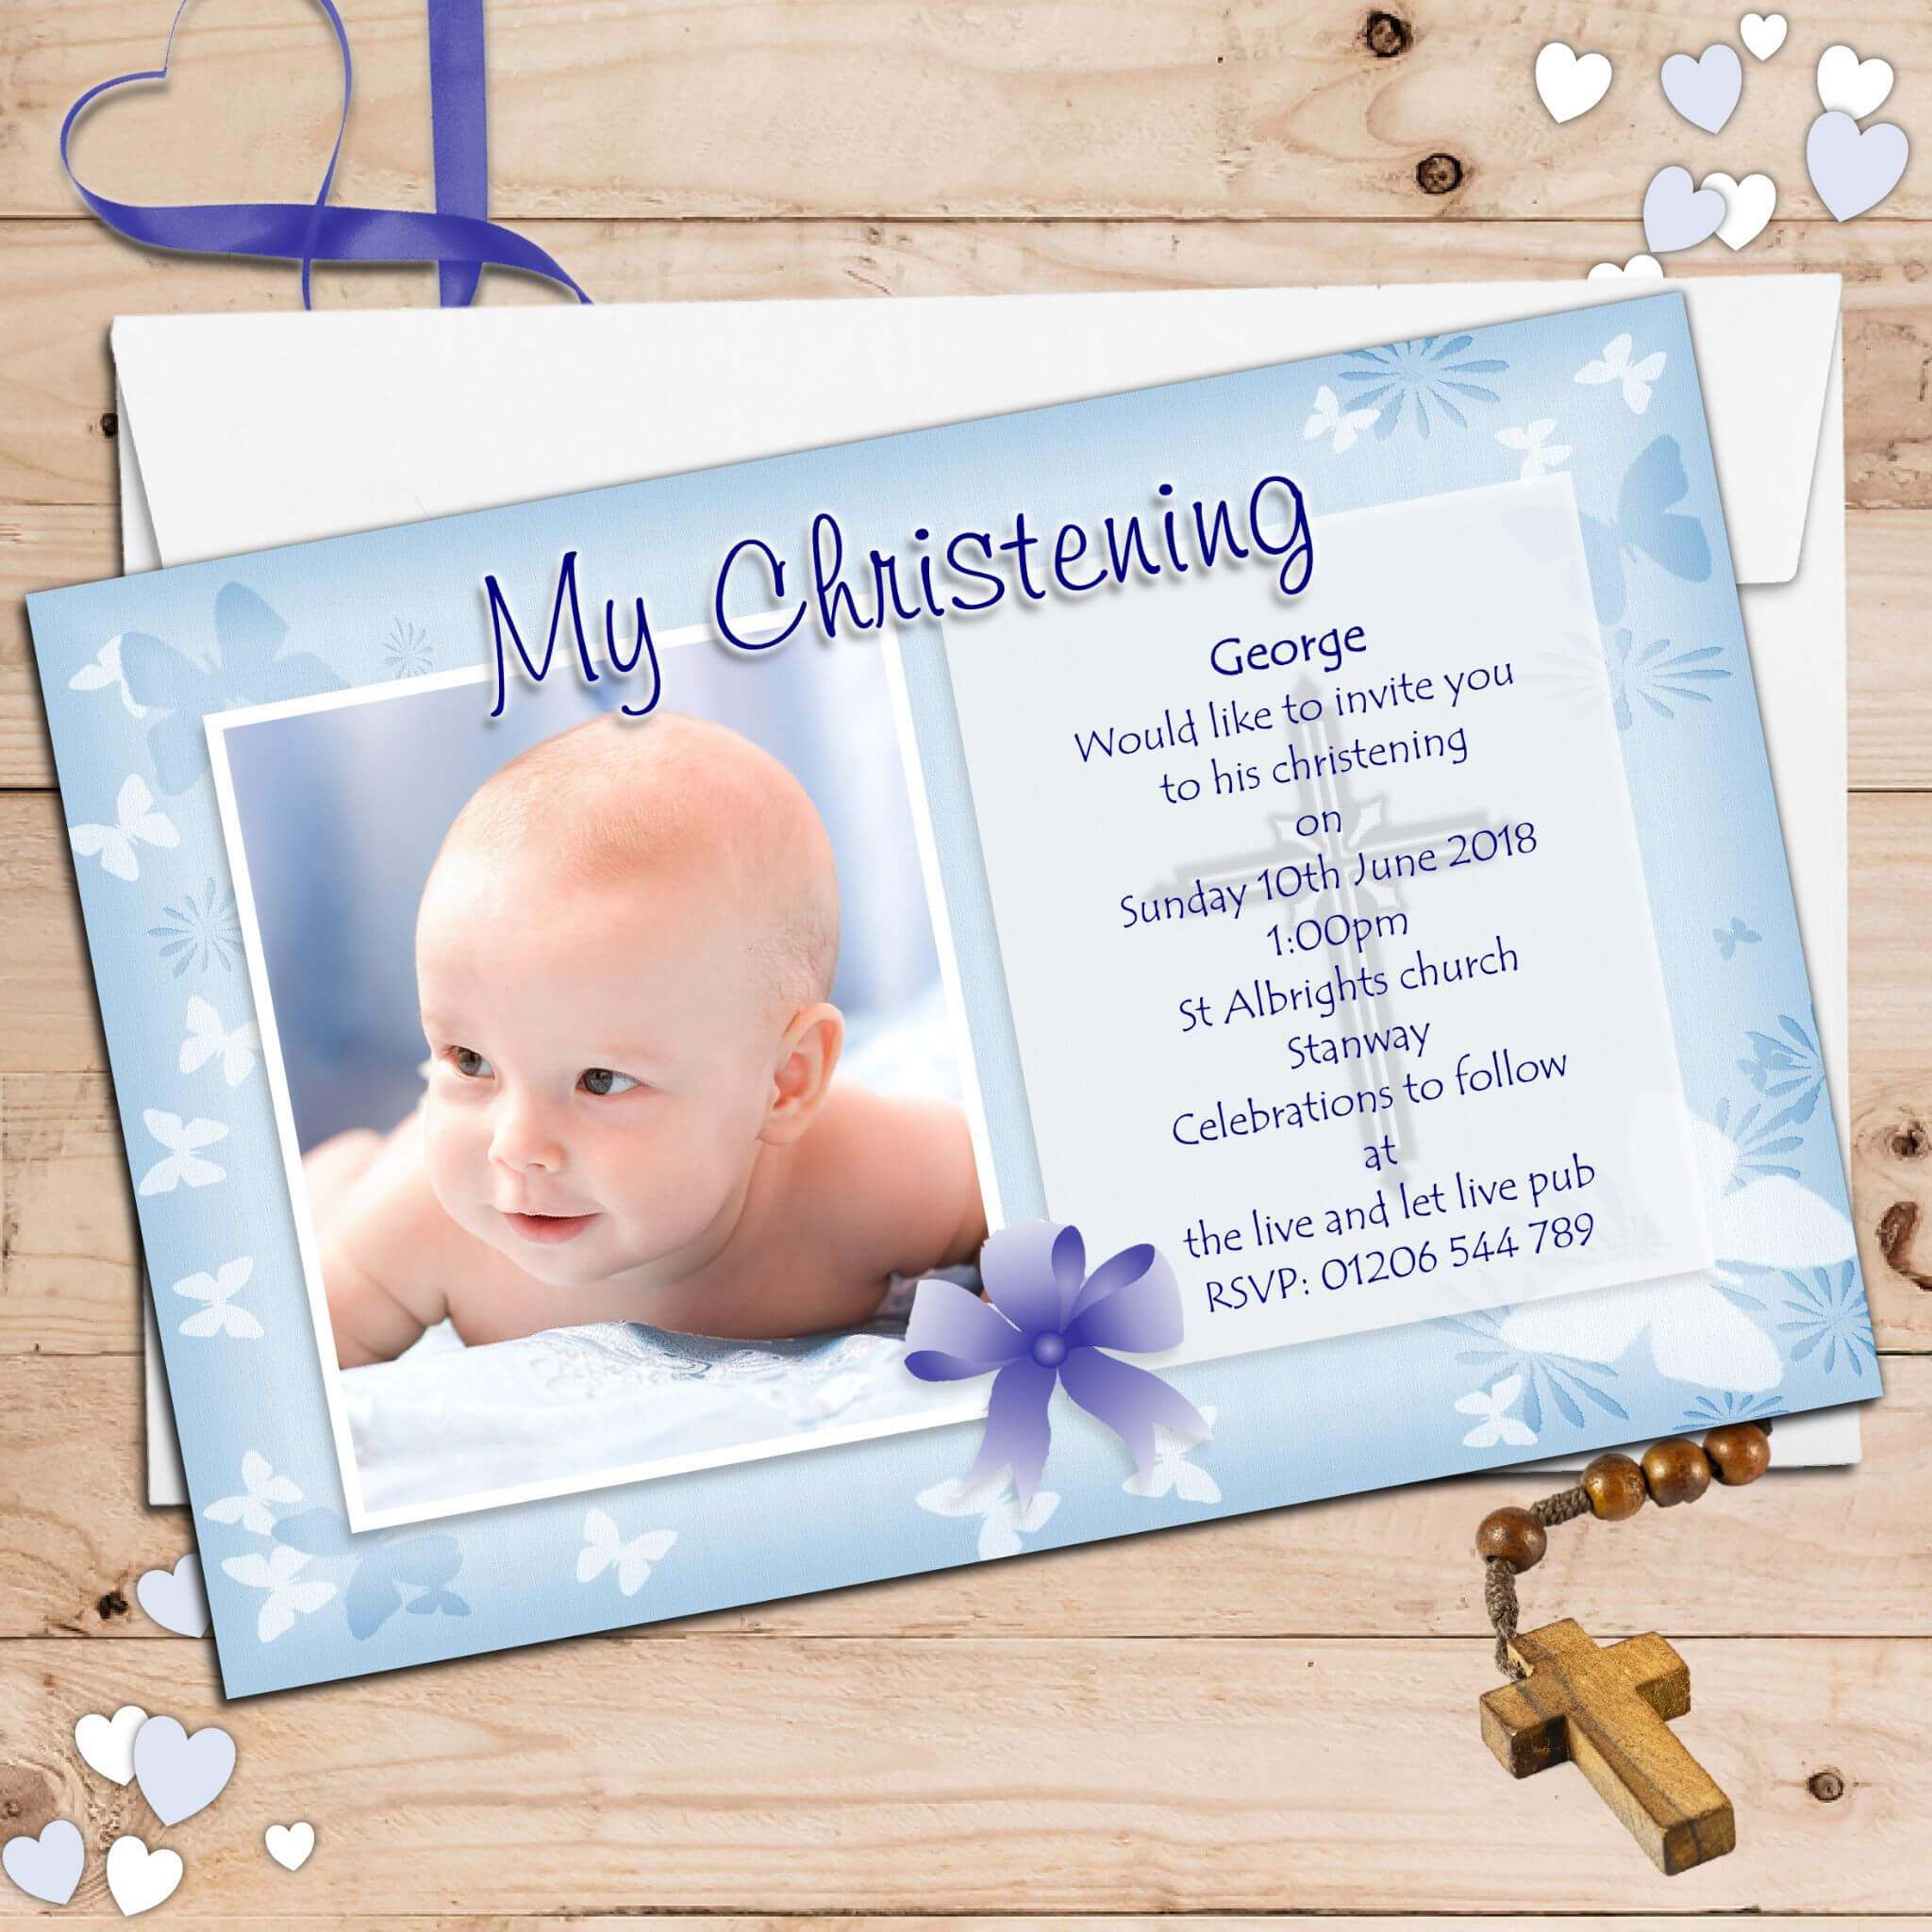 Christening Invitation Cards : Christening Invitation Cards Inside Free Christening Invitation Cards Templates